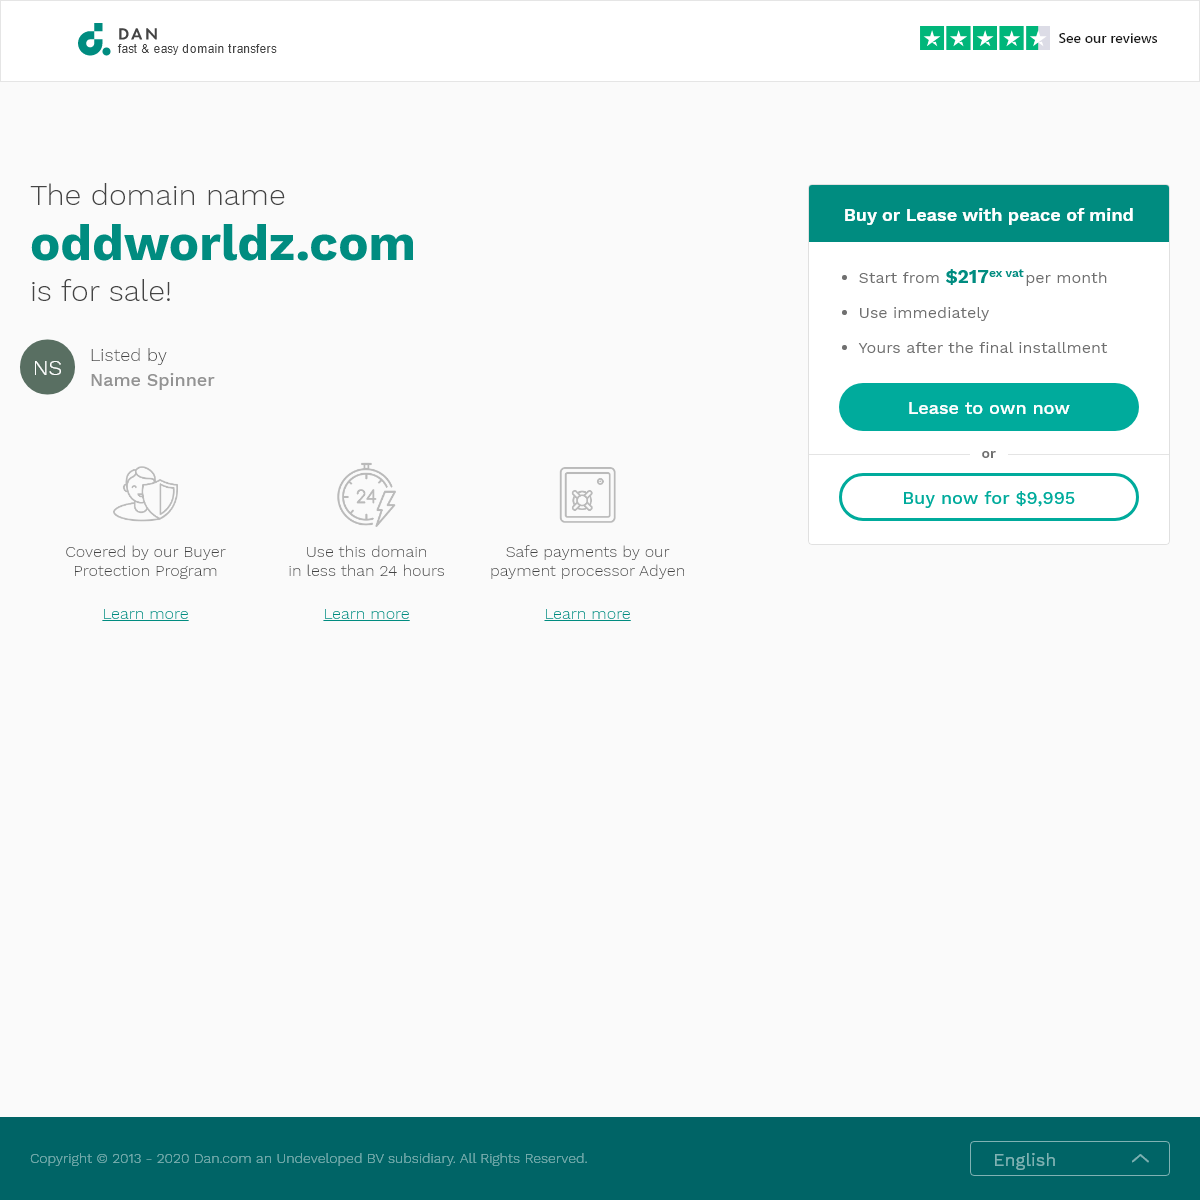 The domain name oddworldz.com is for sale